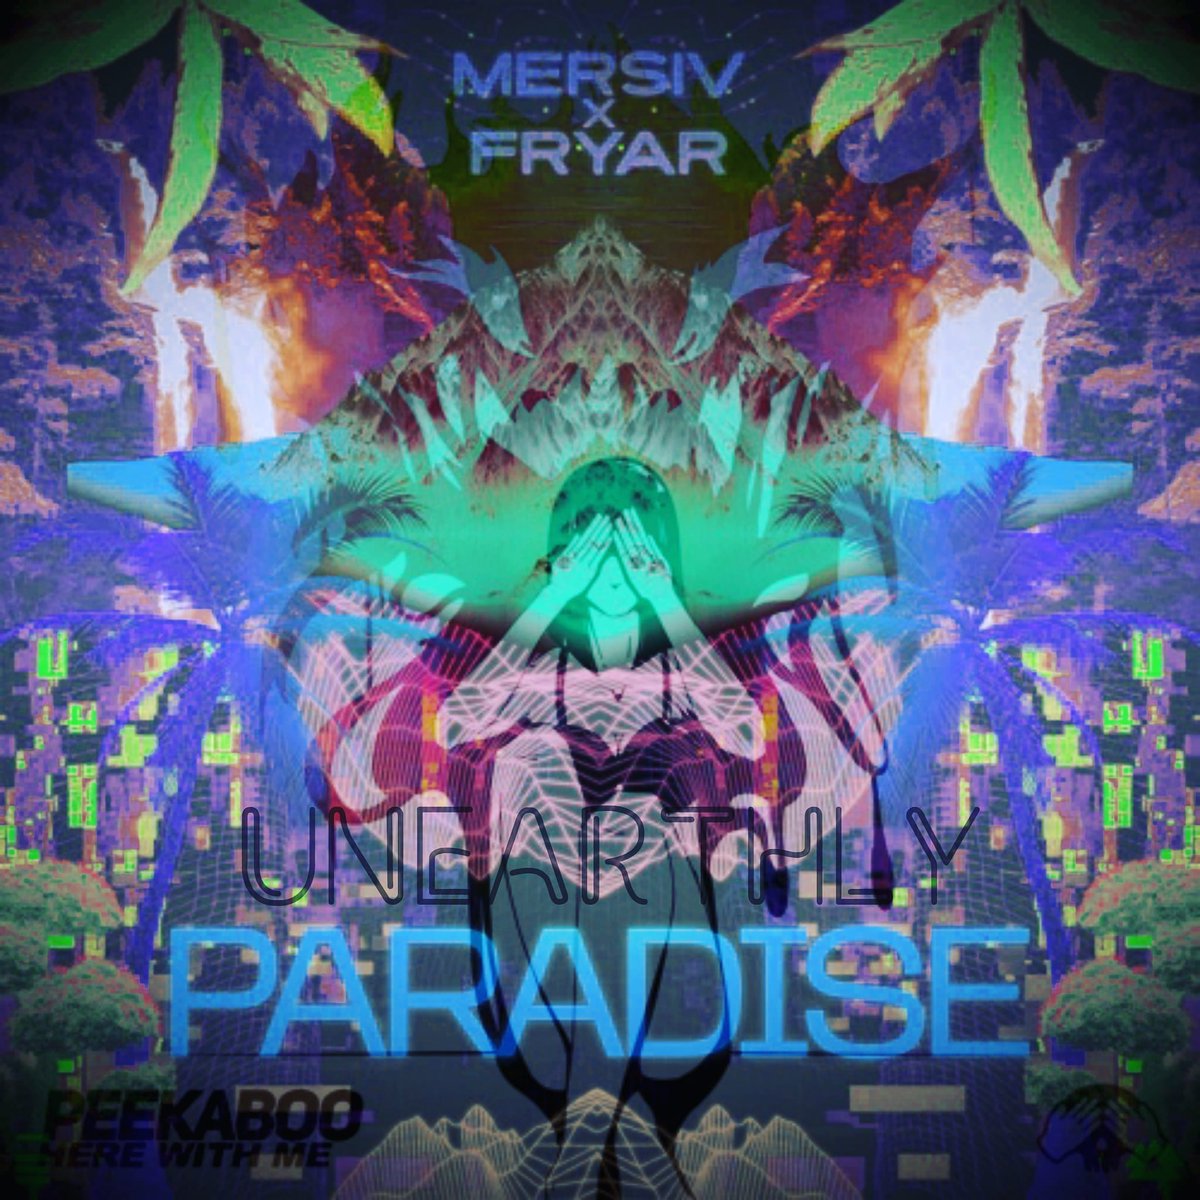 Peekaboo - Here With Me x Mersiv & Fryar - Paradise 

New Mash Flip Clip (OUT NOW)
<remix/mashup> 

#mersiv #peekaboo #bassmusic #wakaan  #headdy #wook #psychedelicbass #undergroundbassmusic #dubstep #wub #basshead #bassmusiclovers #experimentalbass